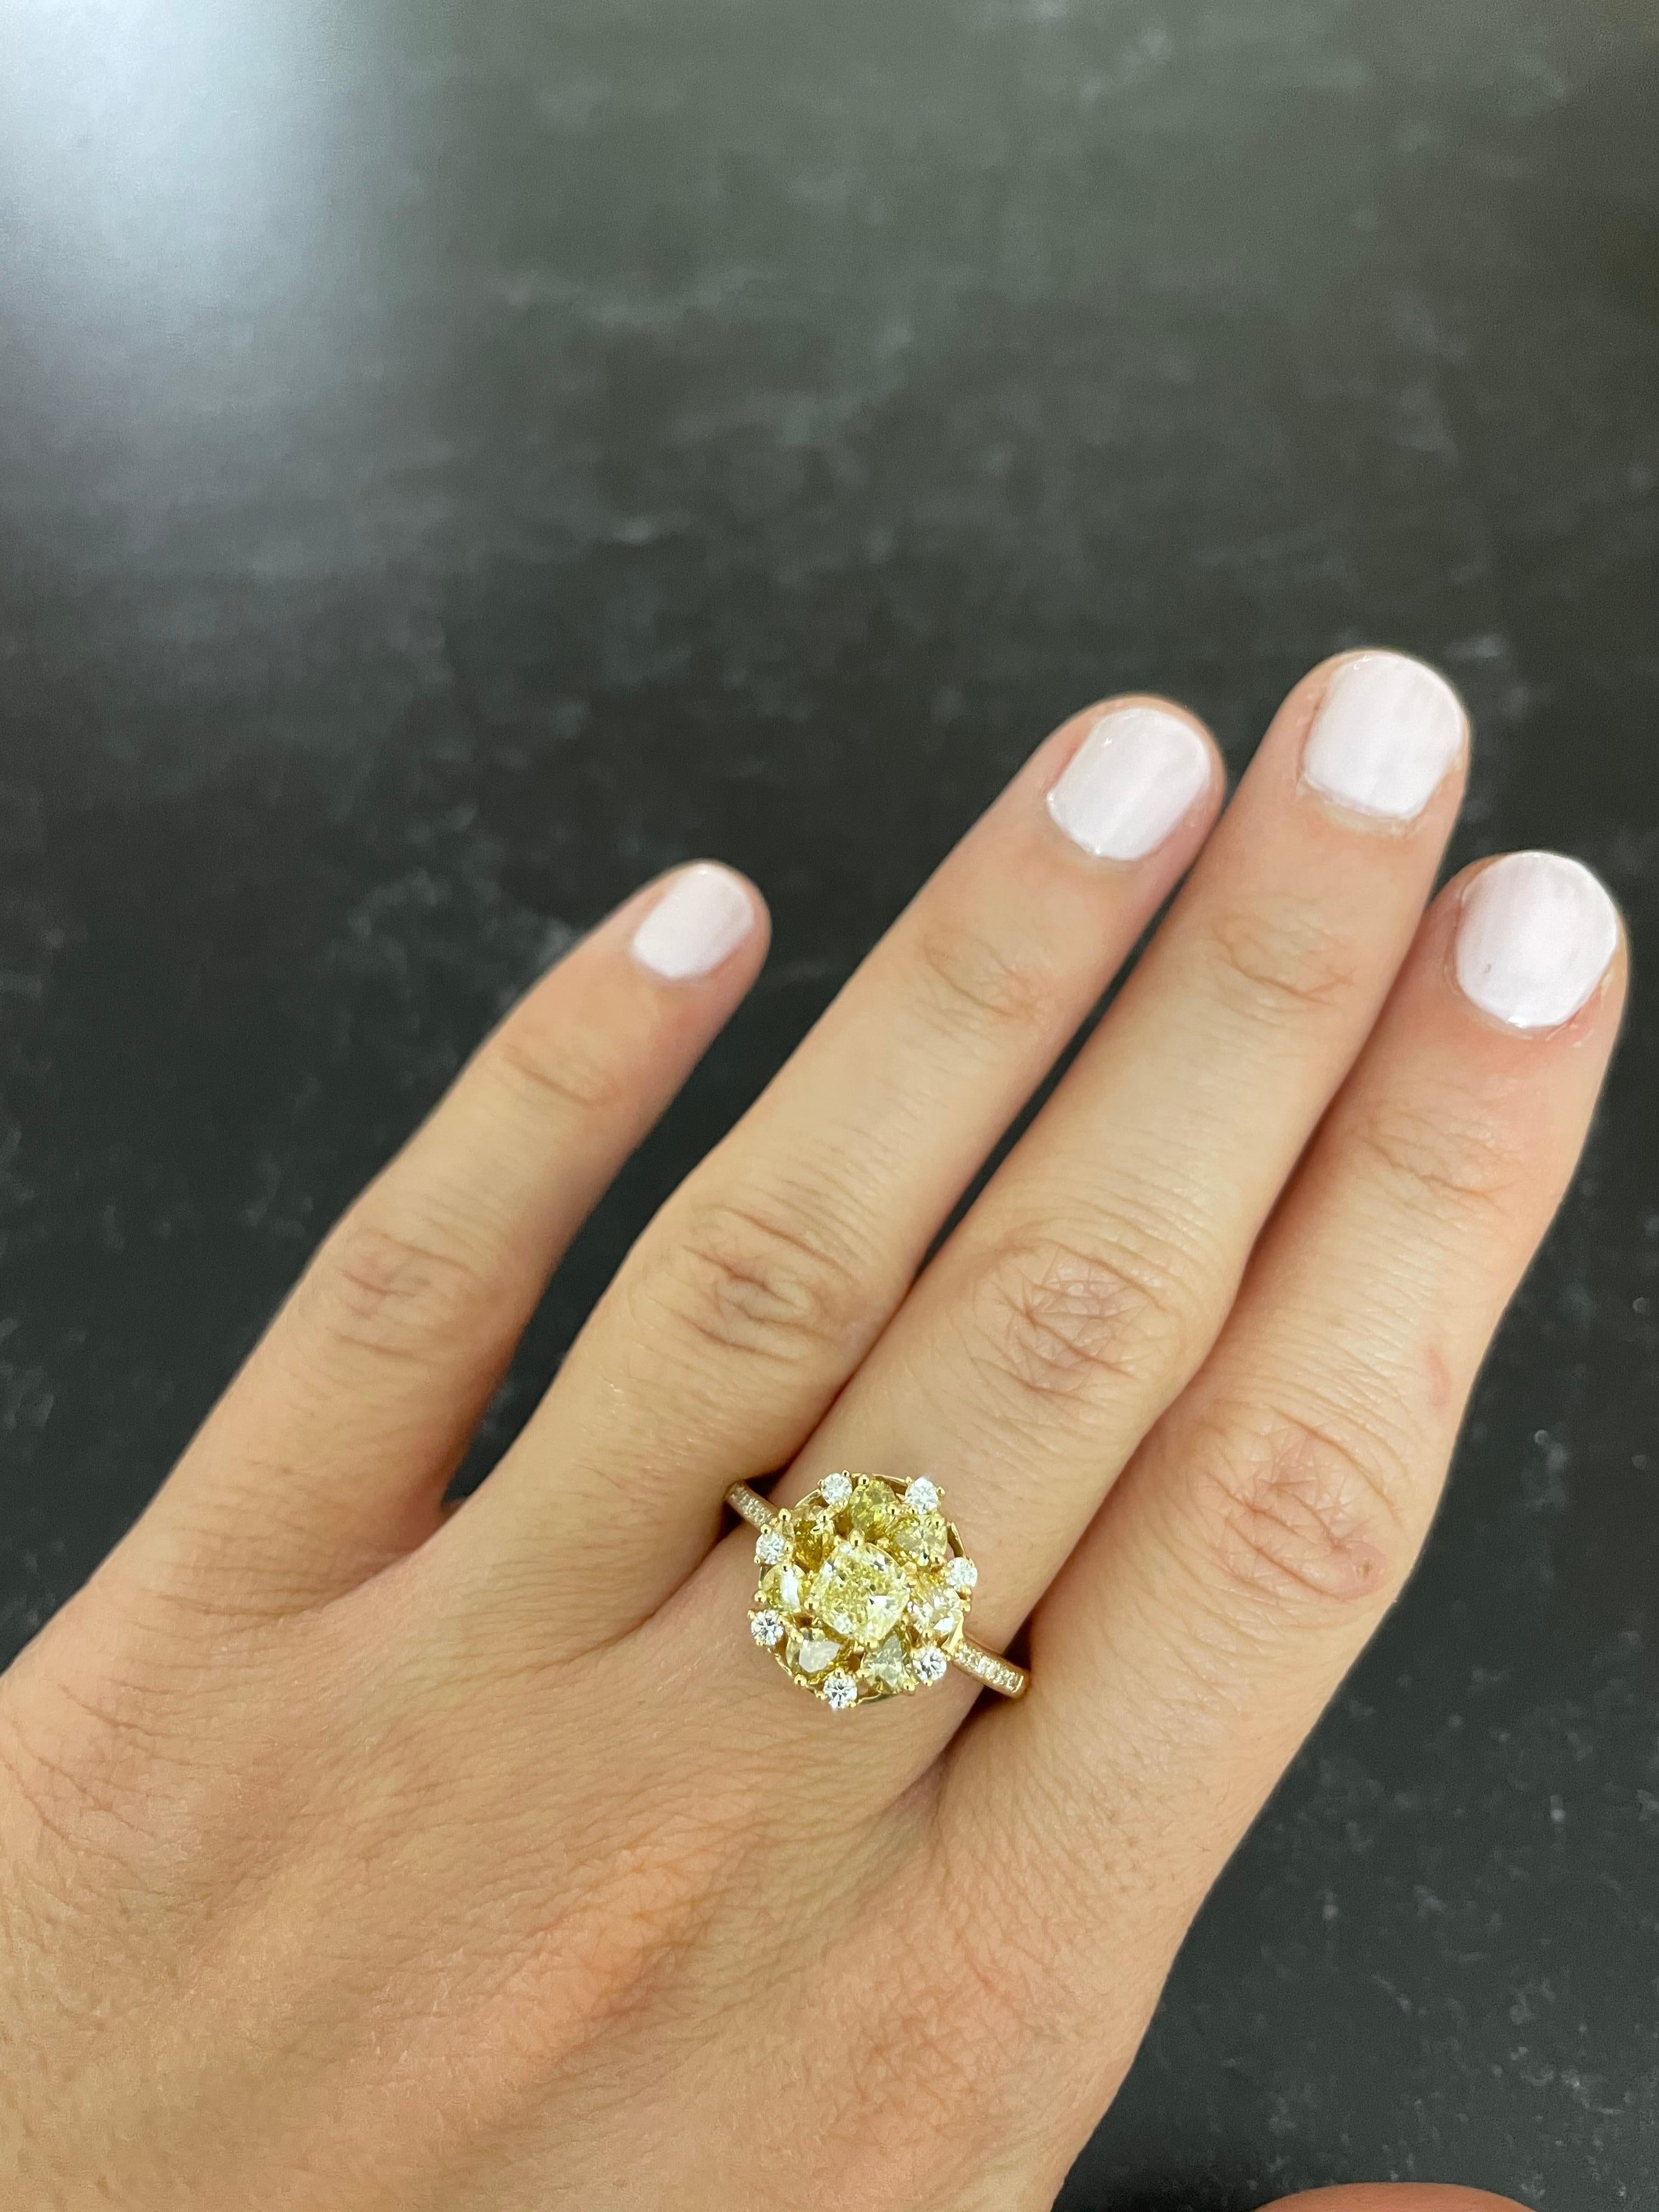 Princess Cut 0.58 Carat Princess Yellow Diamond Ring with Multi-Color Diamond 18k Yellow Gold For Sale